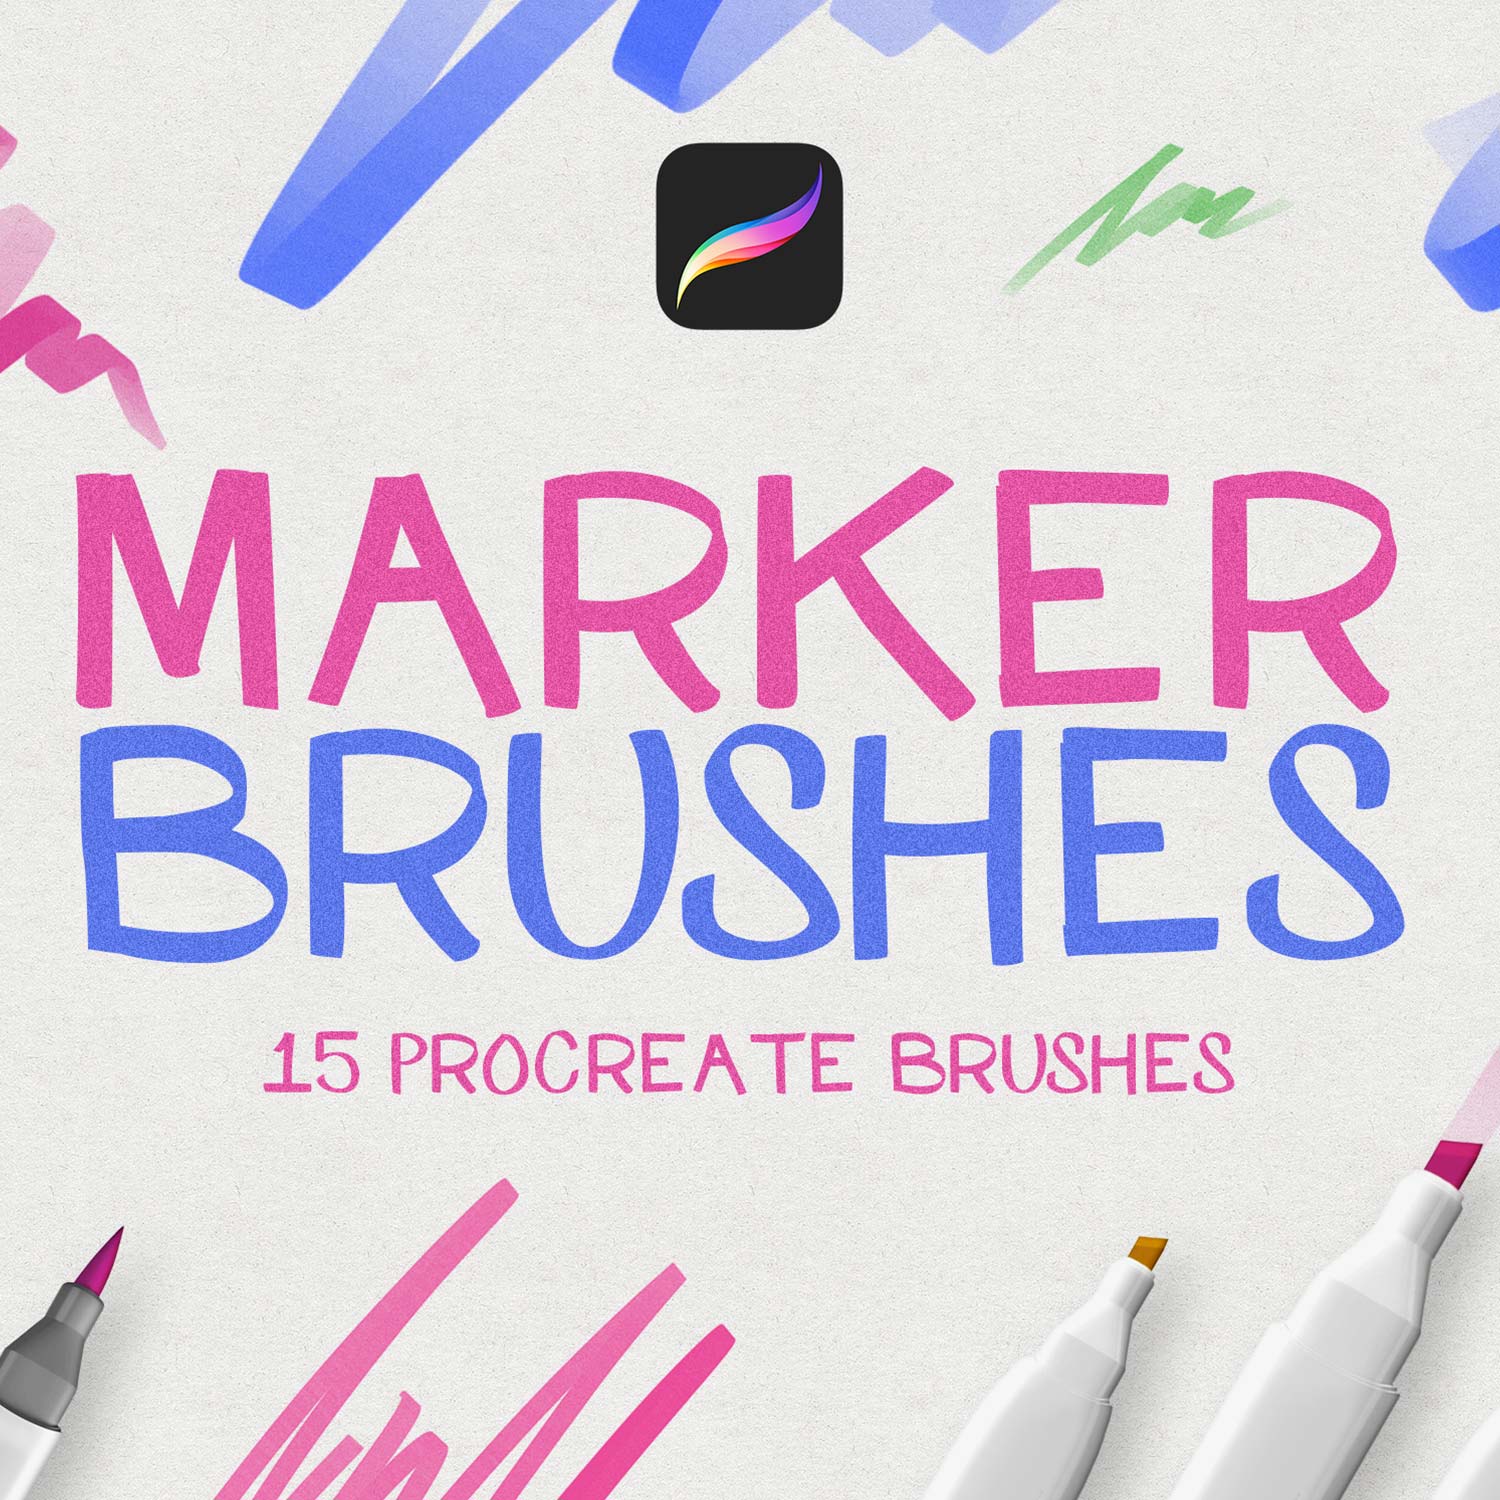 Marker Procreate Brushes cover image.